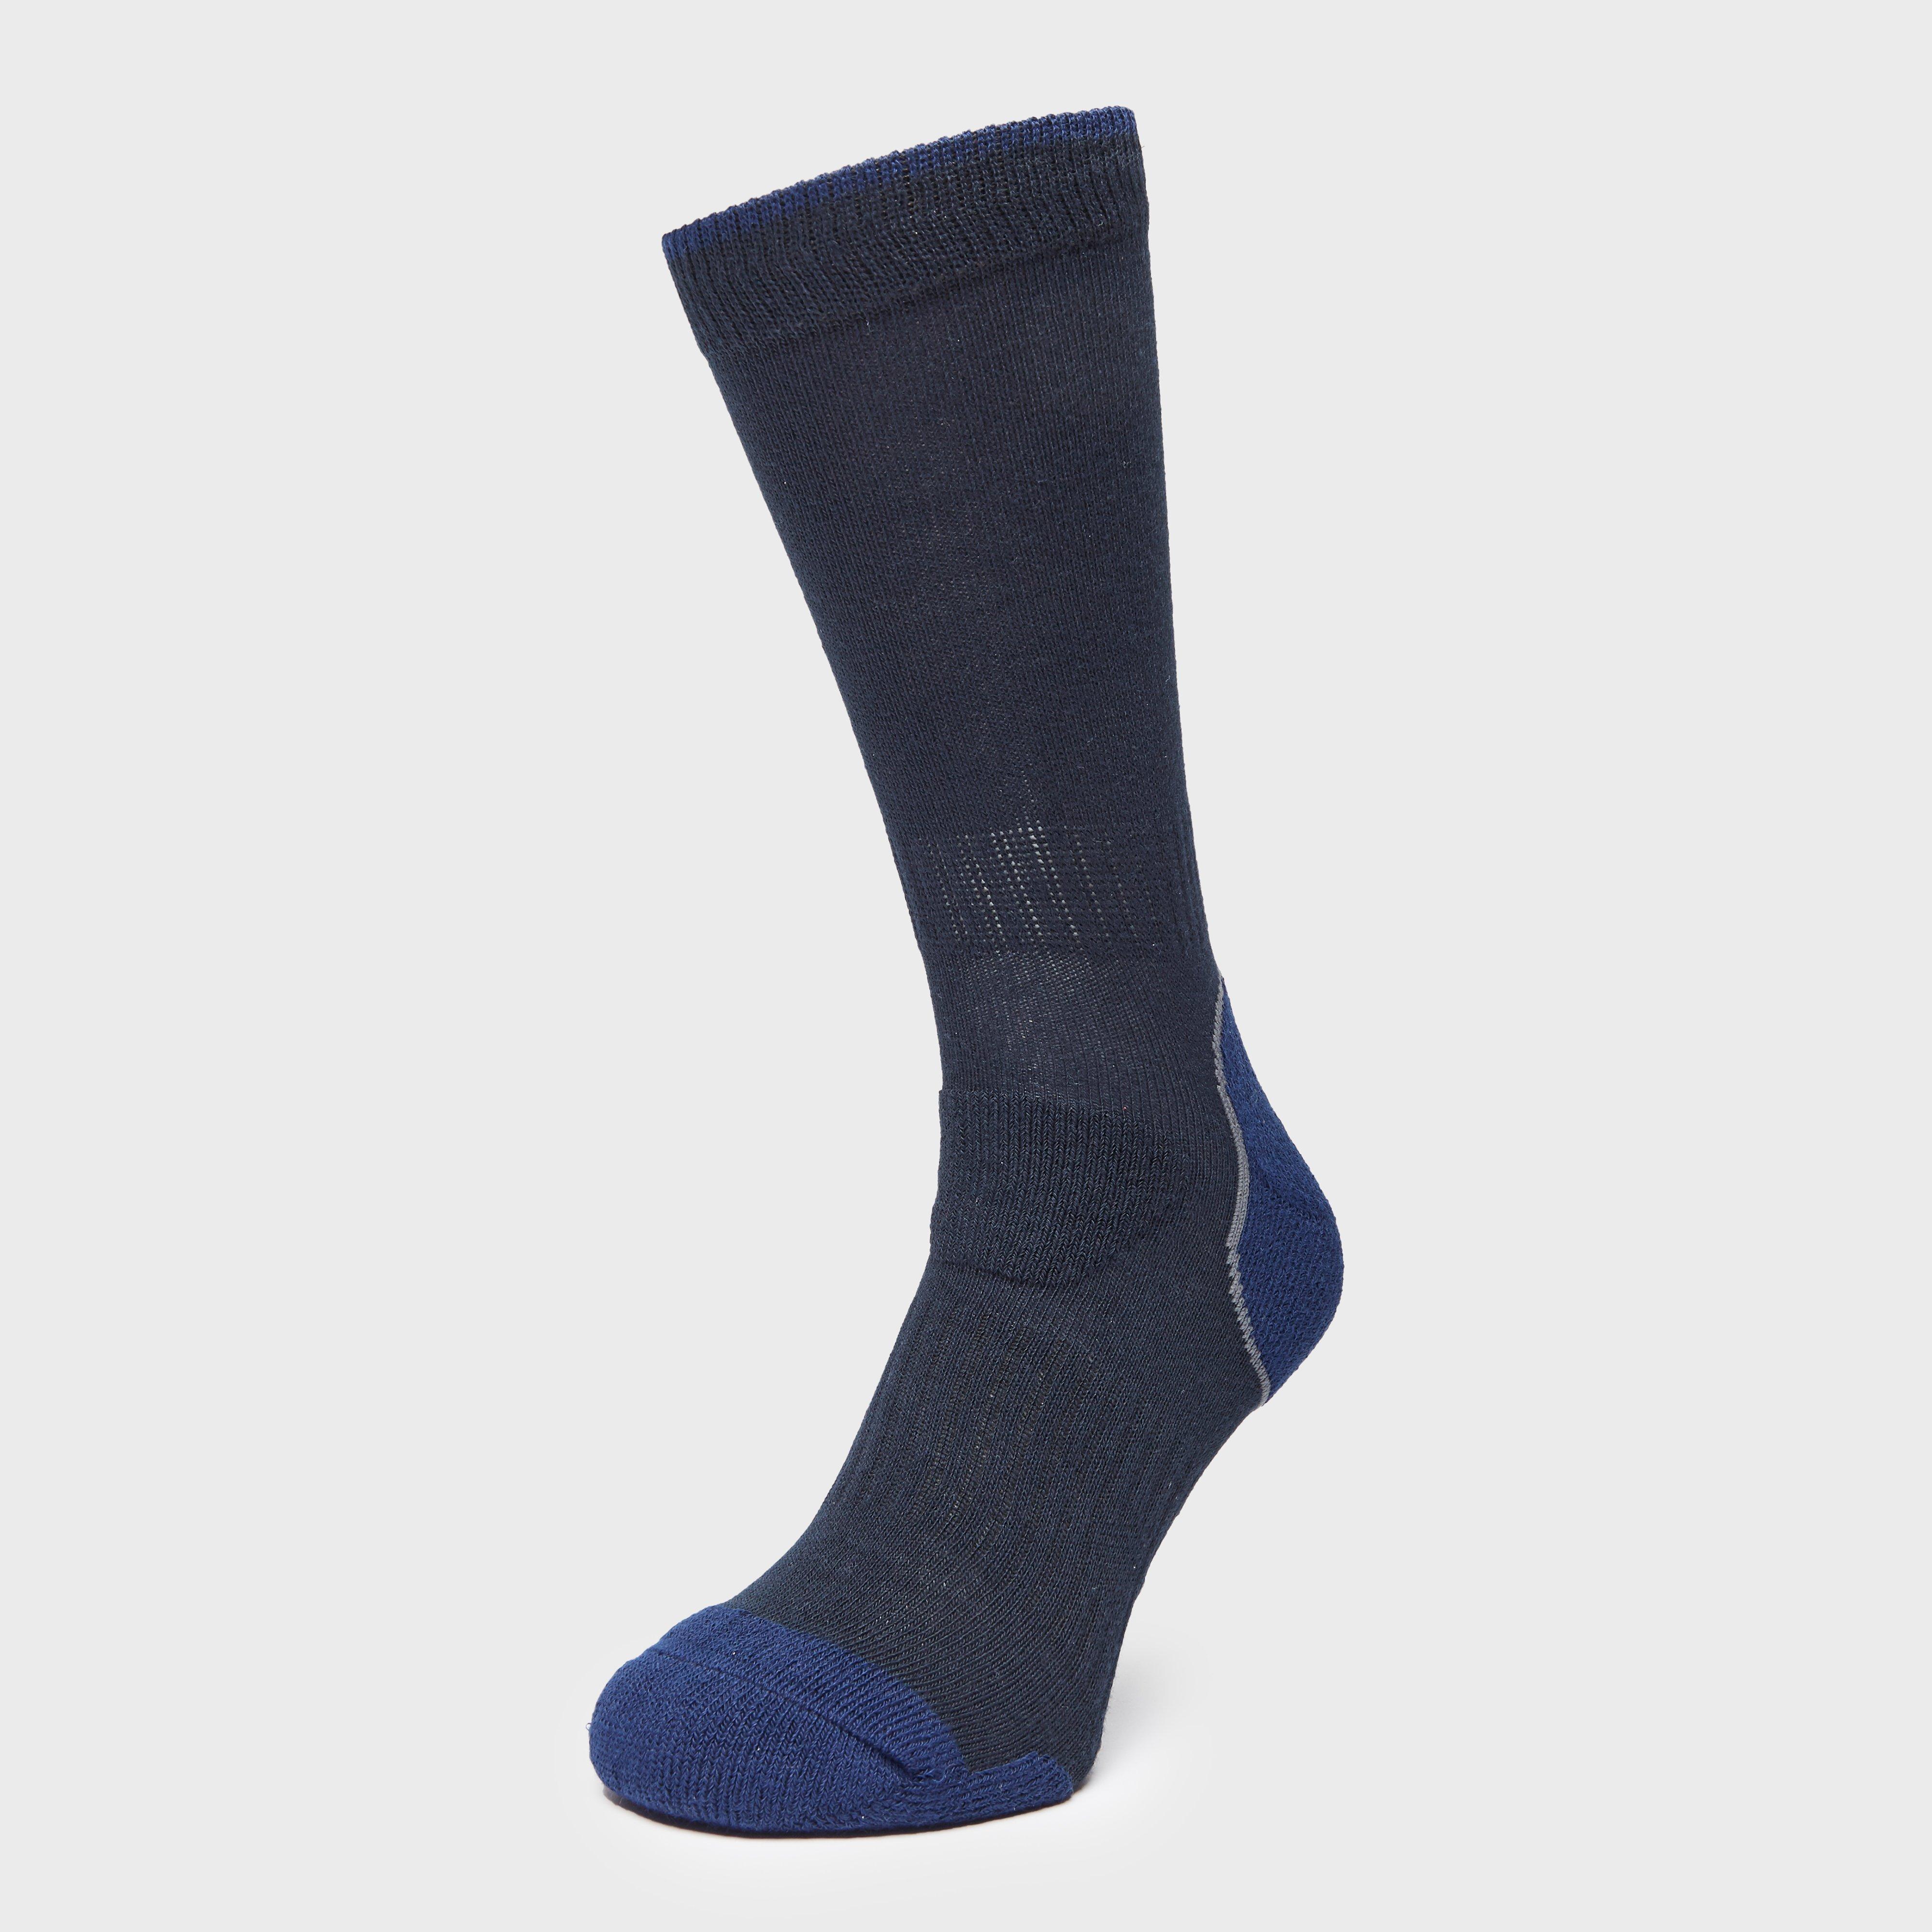 Brasher Mens Light Hiker Socks - Navy/blu  Navy/blu